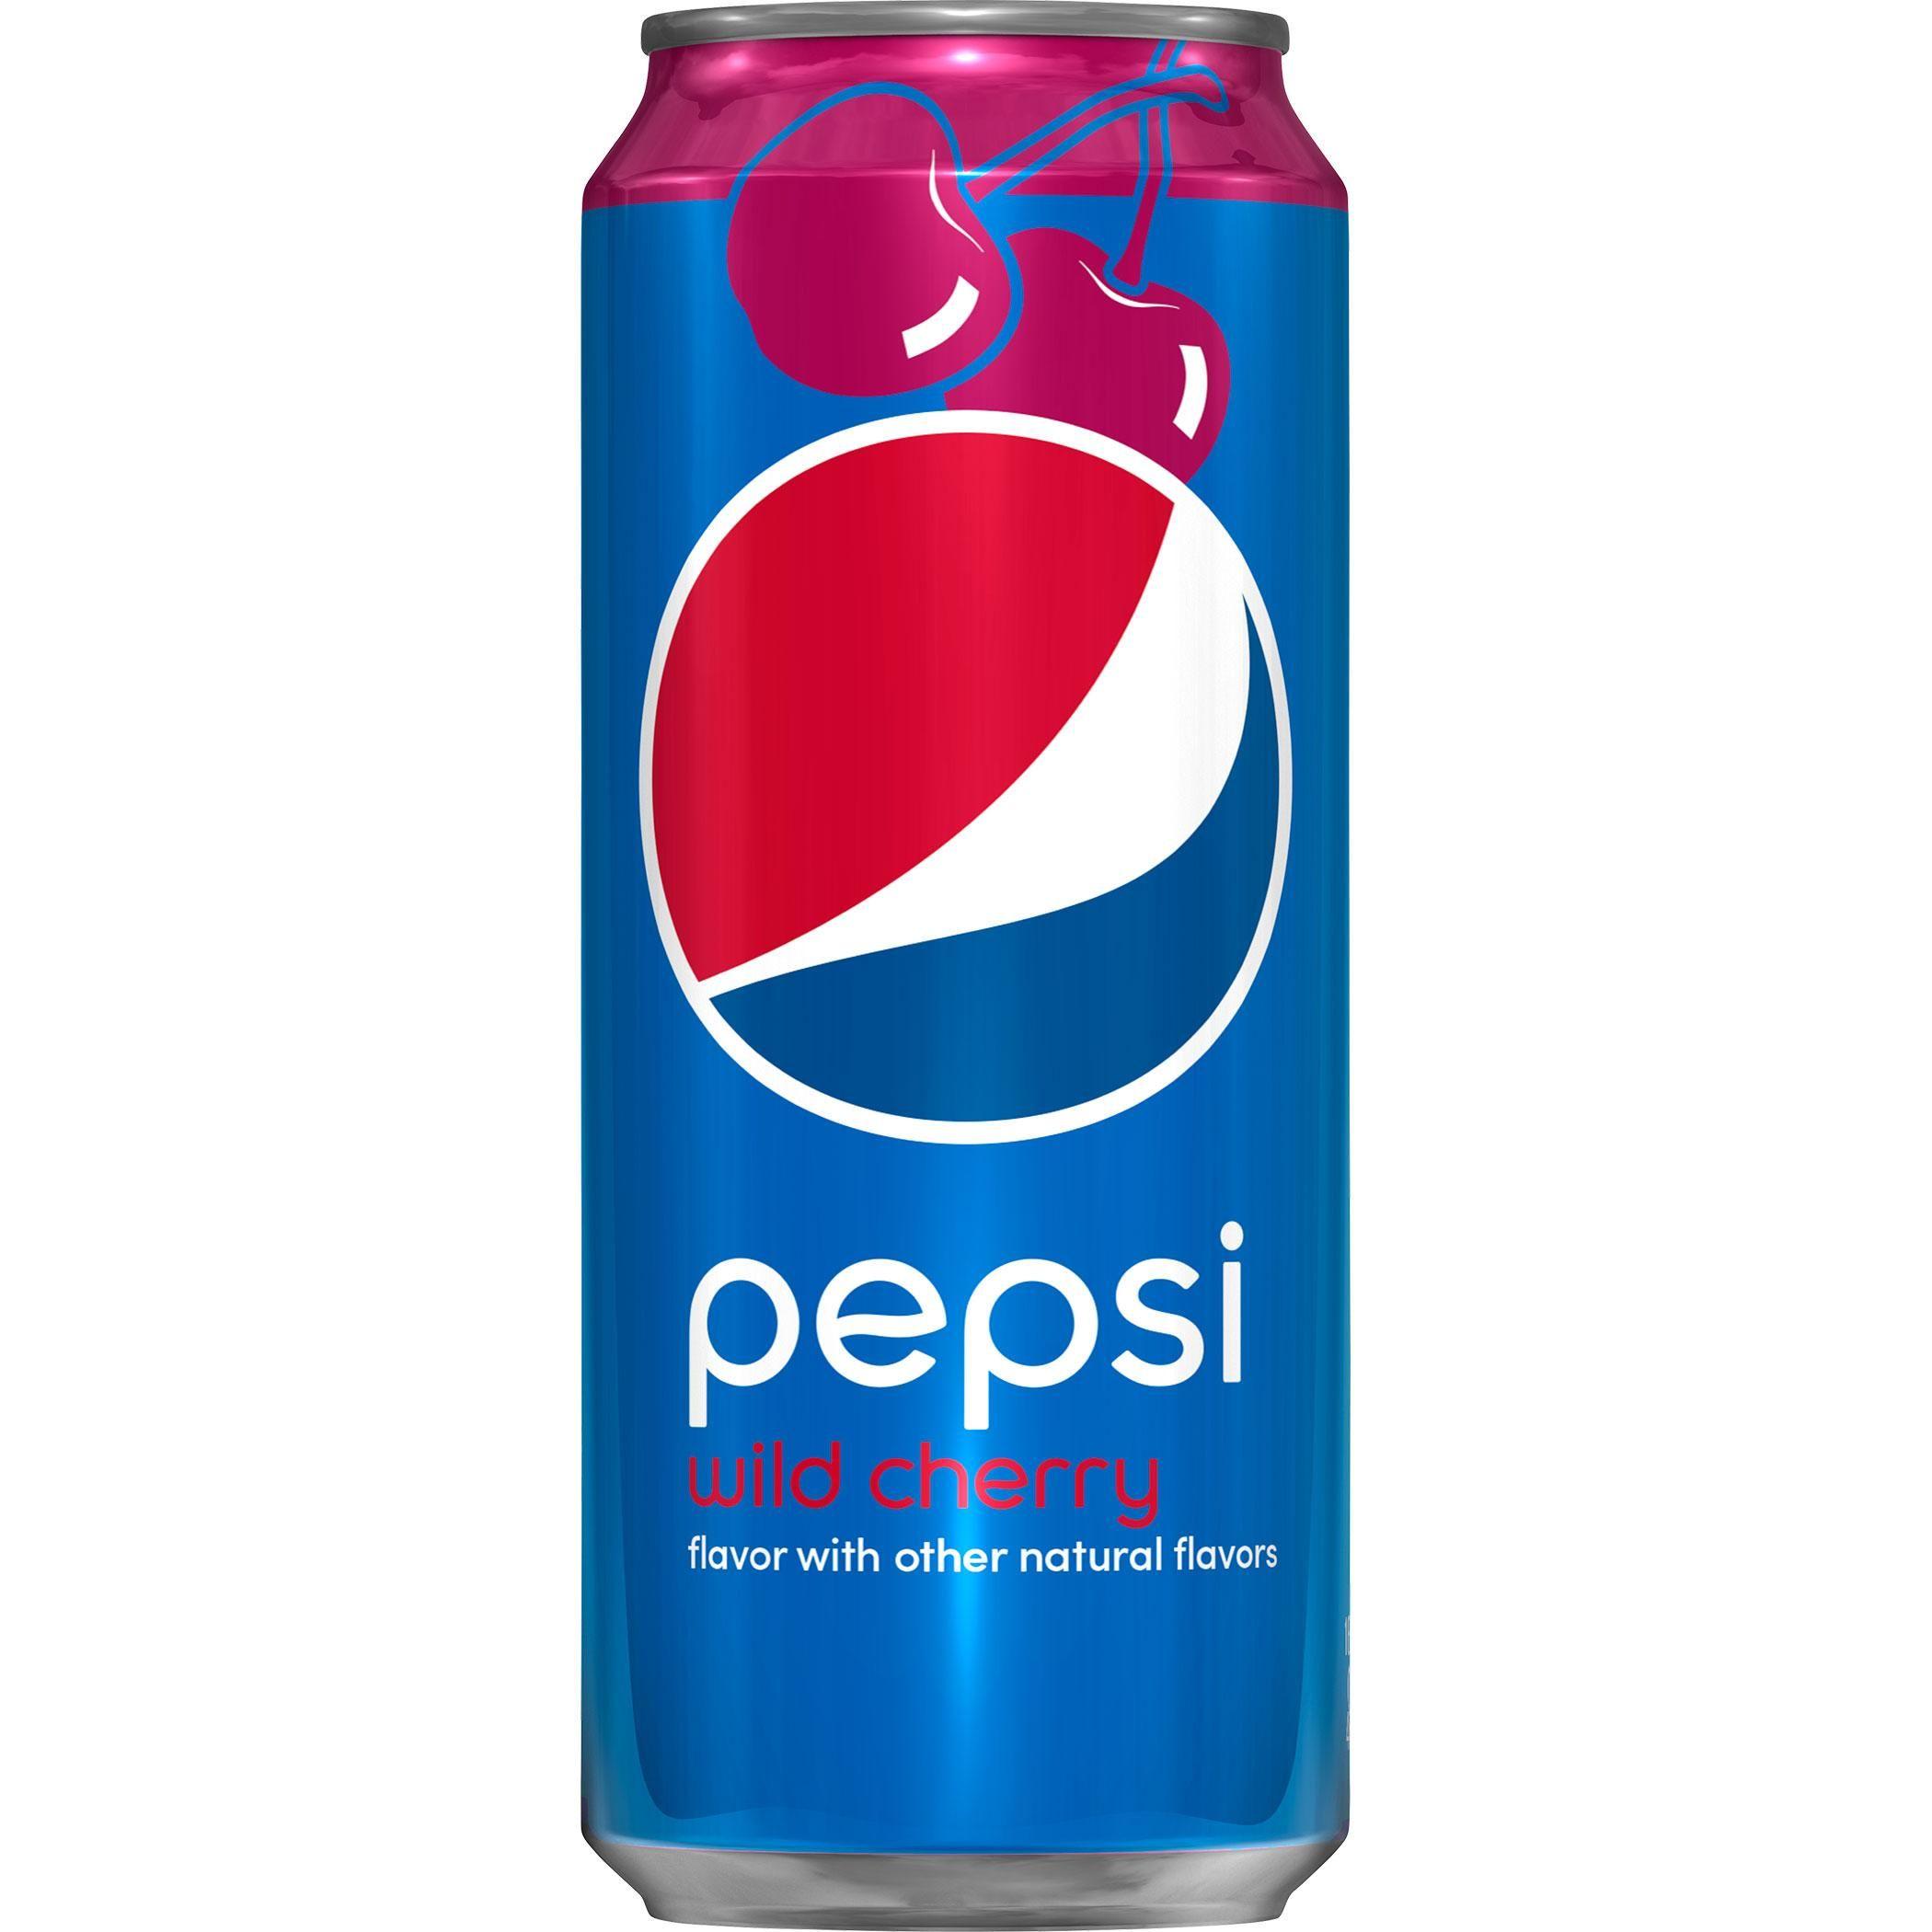 Wild Cherry Pepsi Logo - Amazon.com : Pepsi Wild Cherry 16 Ounce Cans, 12 Count : Grocery